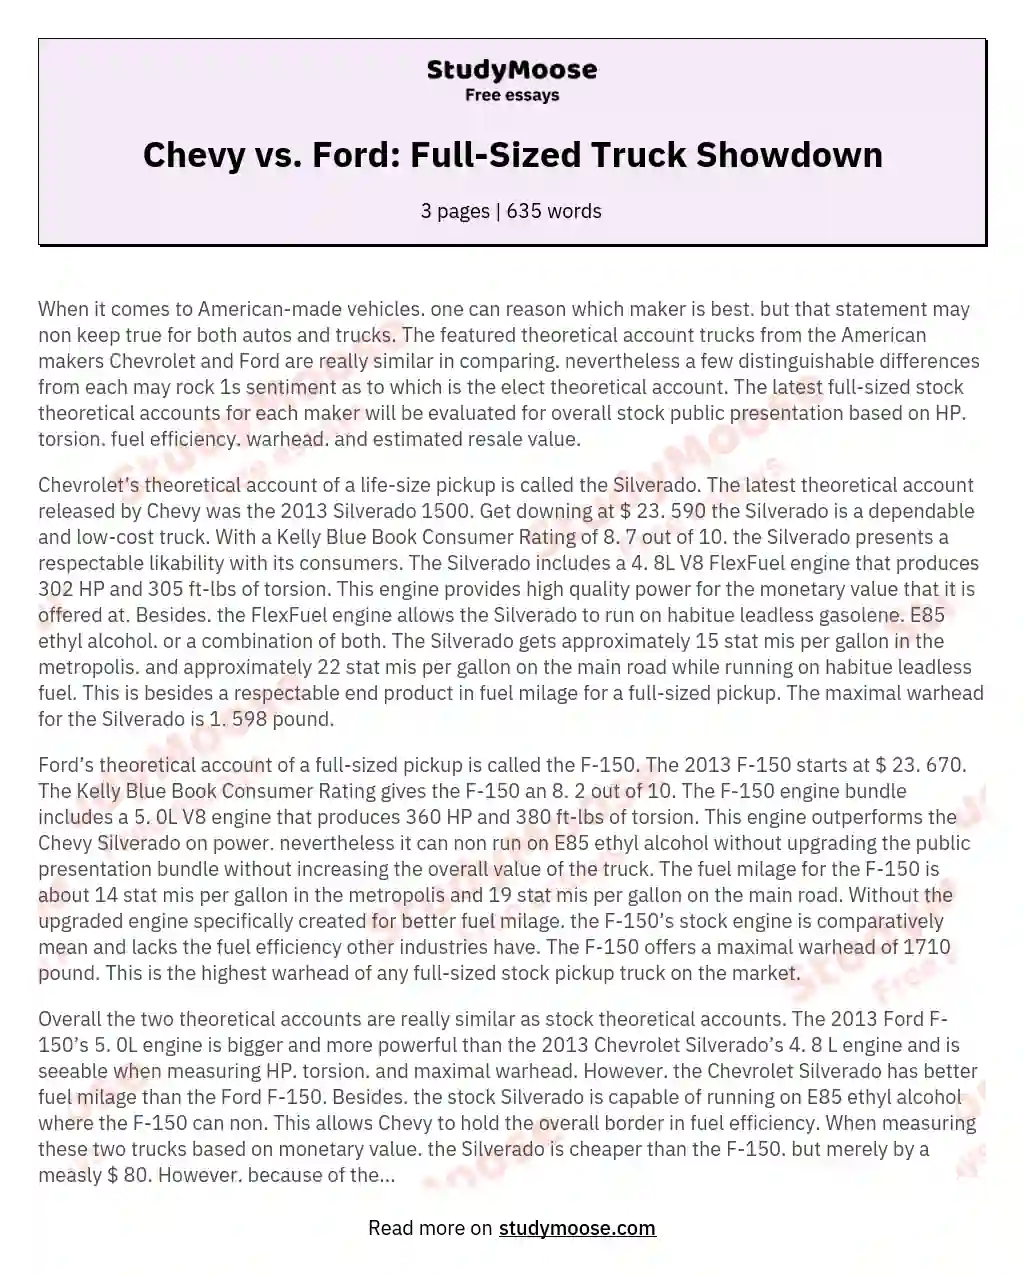 Chevy vs. Ford: Full-Sized Truck Showdown essay